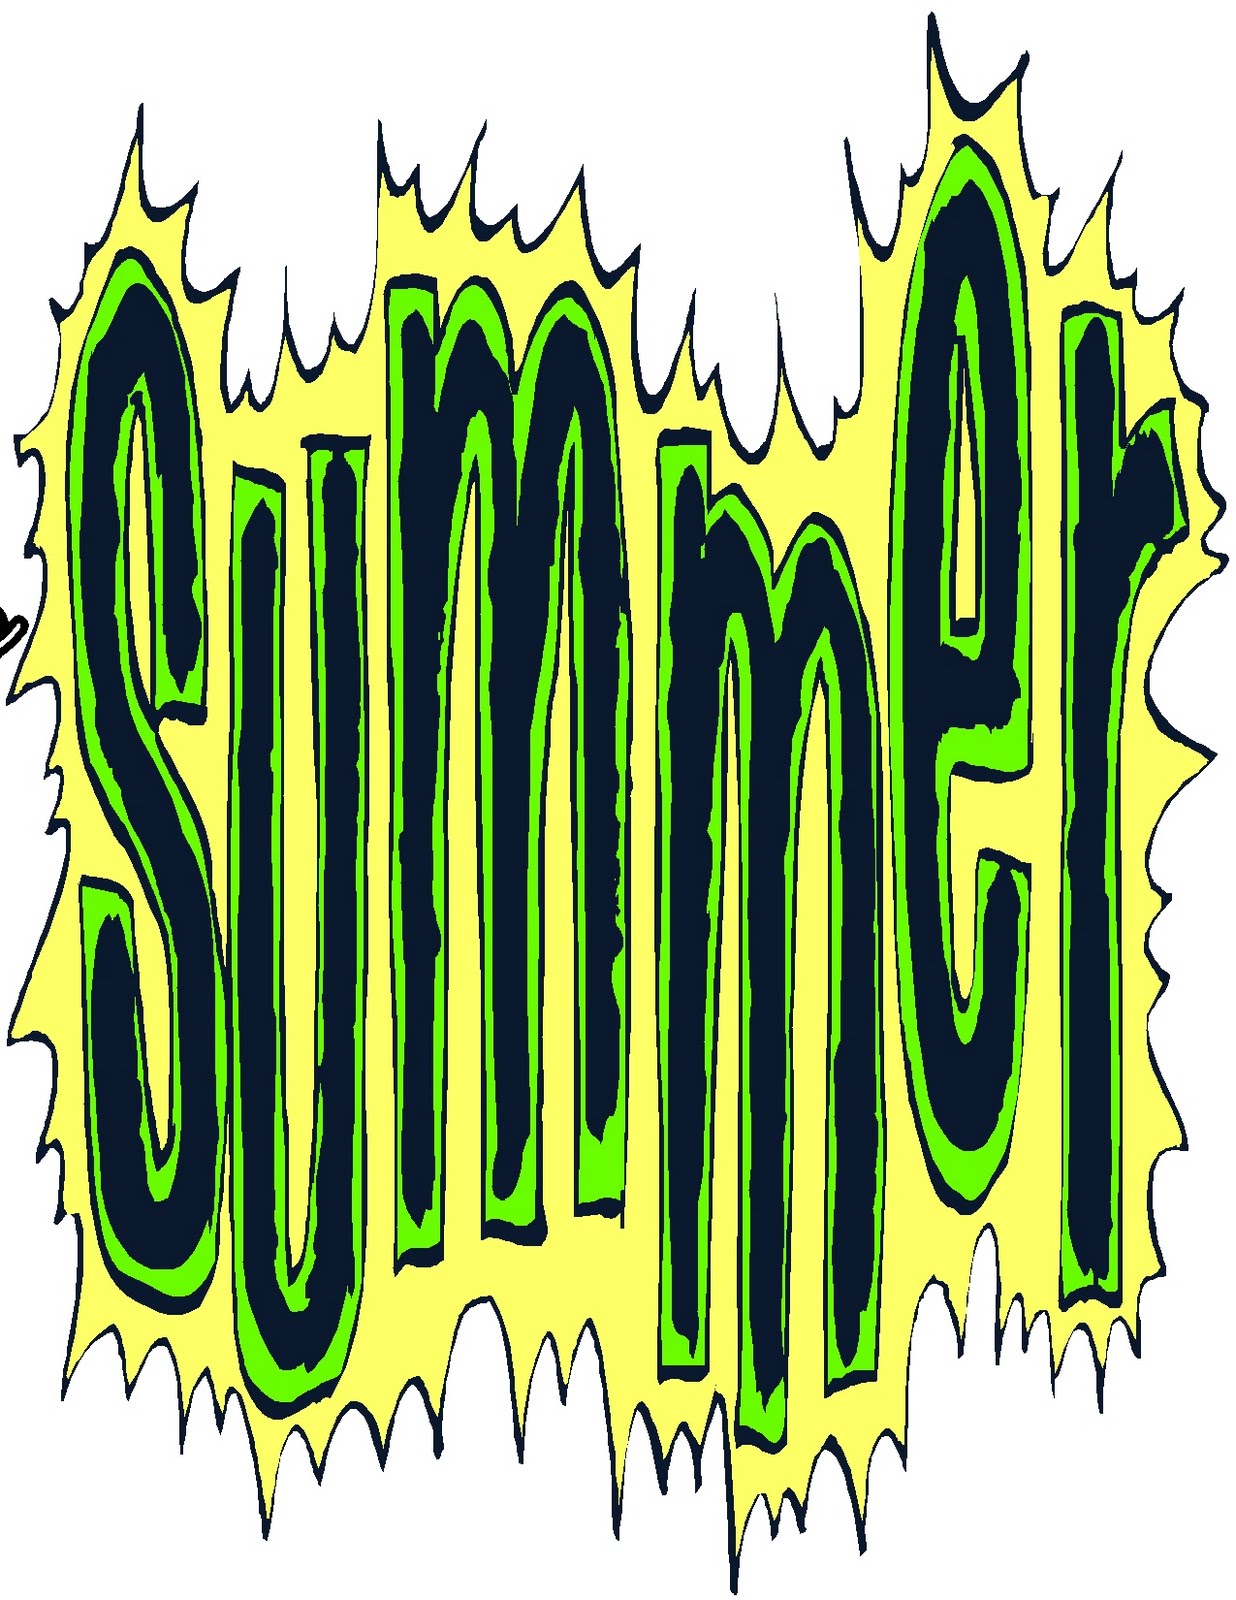 Carolina University of Theology News: Summer is on the horizion!